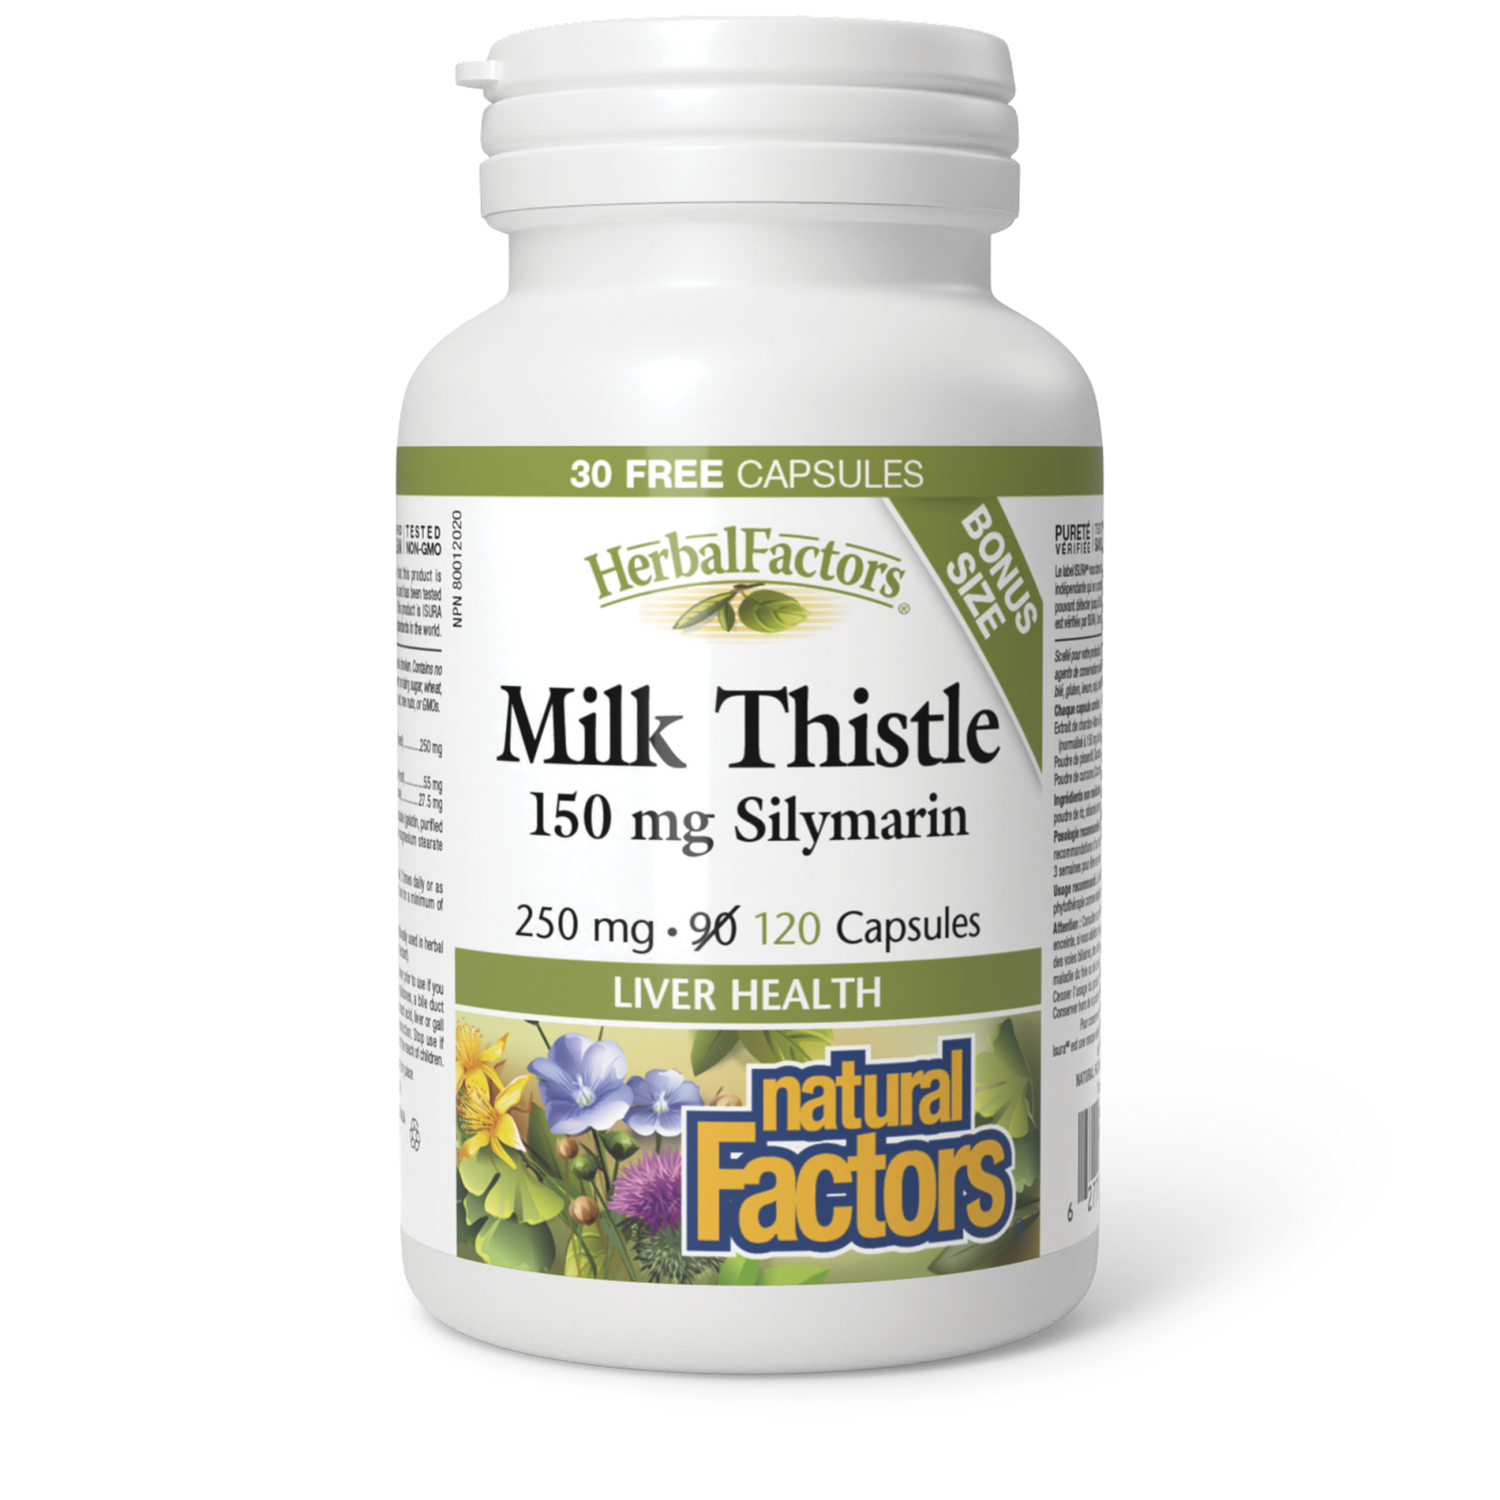 Milk Thistle 250 mg/150 mg Silymarin, HerbalFactors, Natural Factors|v|image|8181